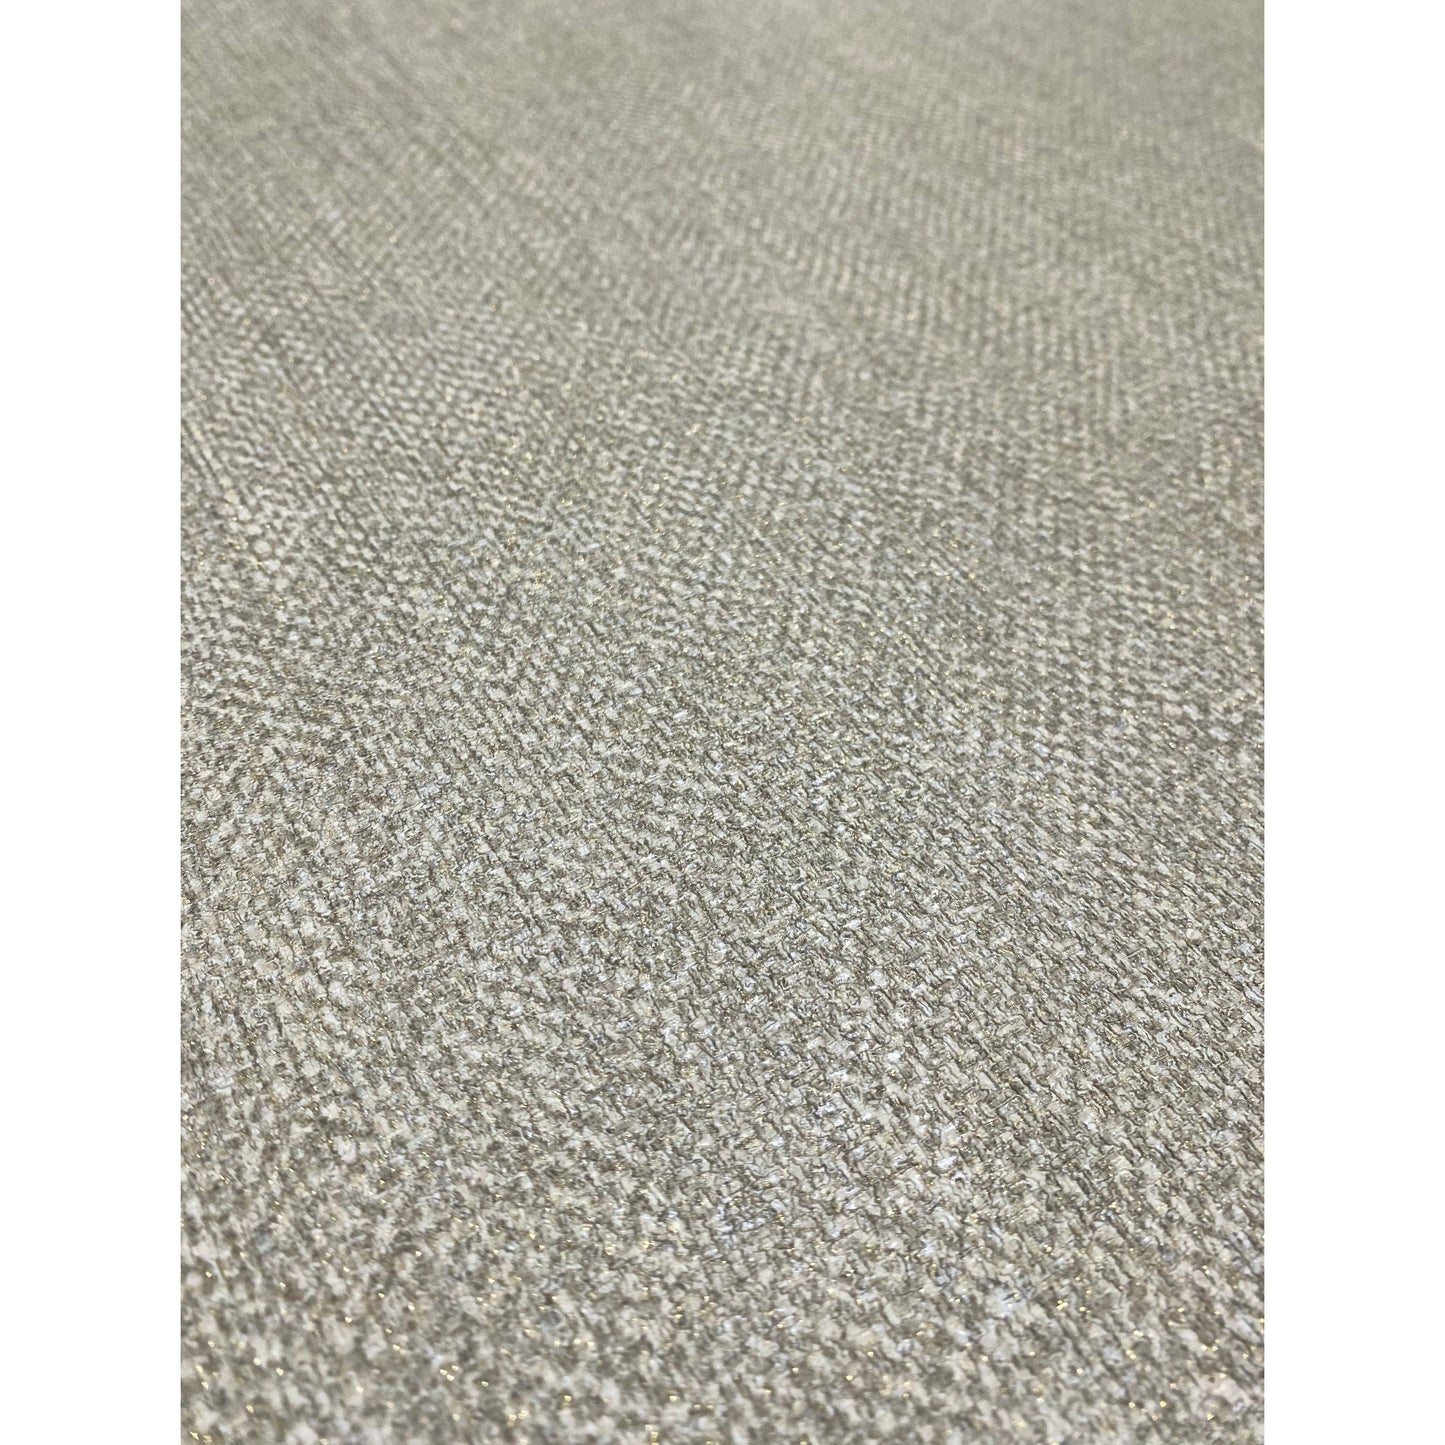 Muriva Venezia Texture Taupe Wallpaper (M67308)